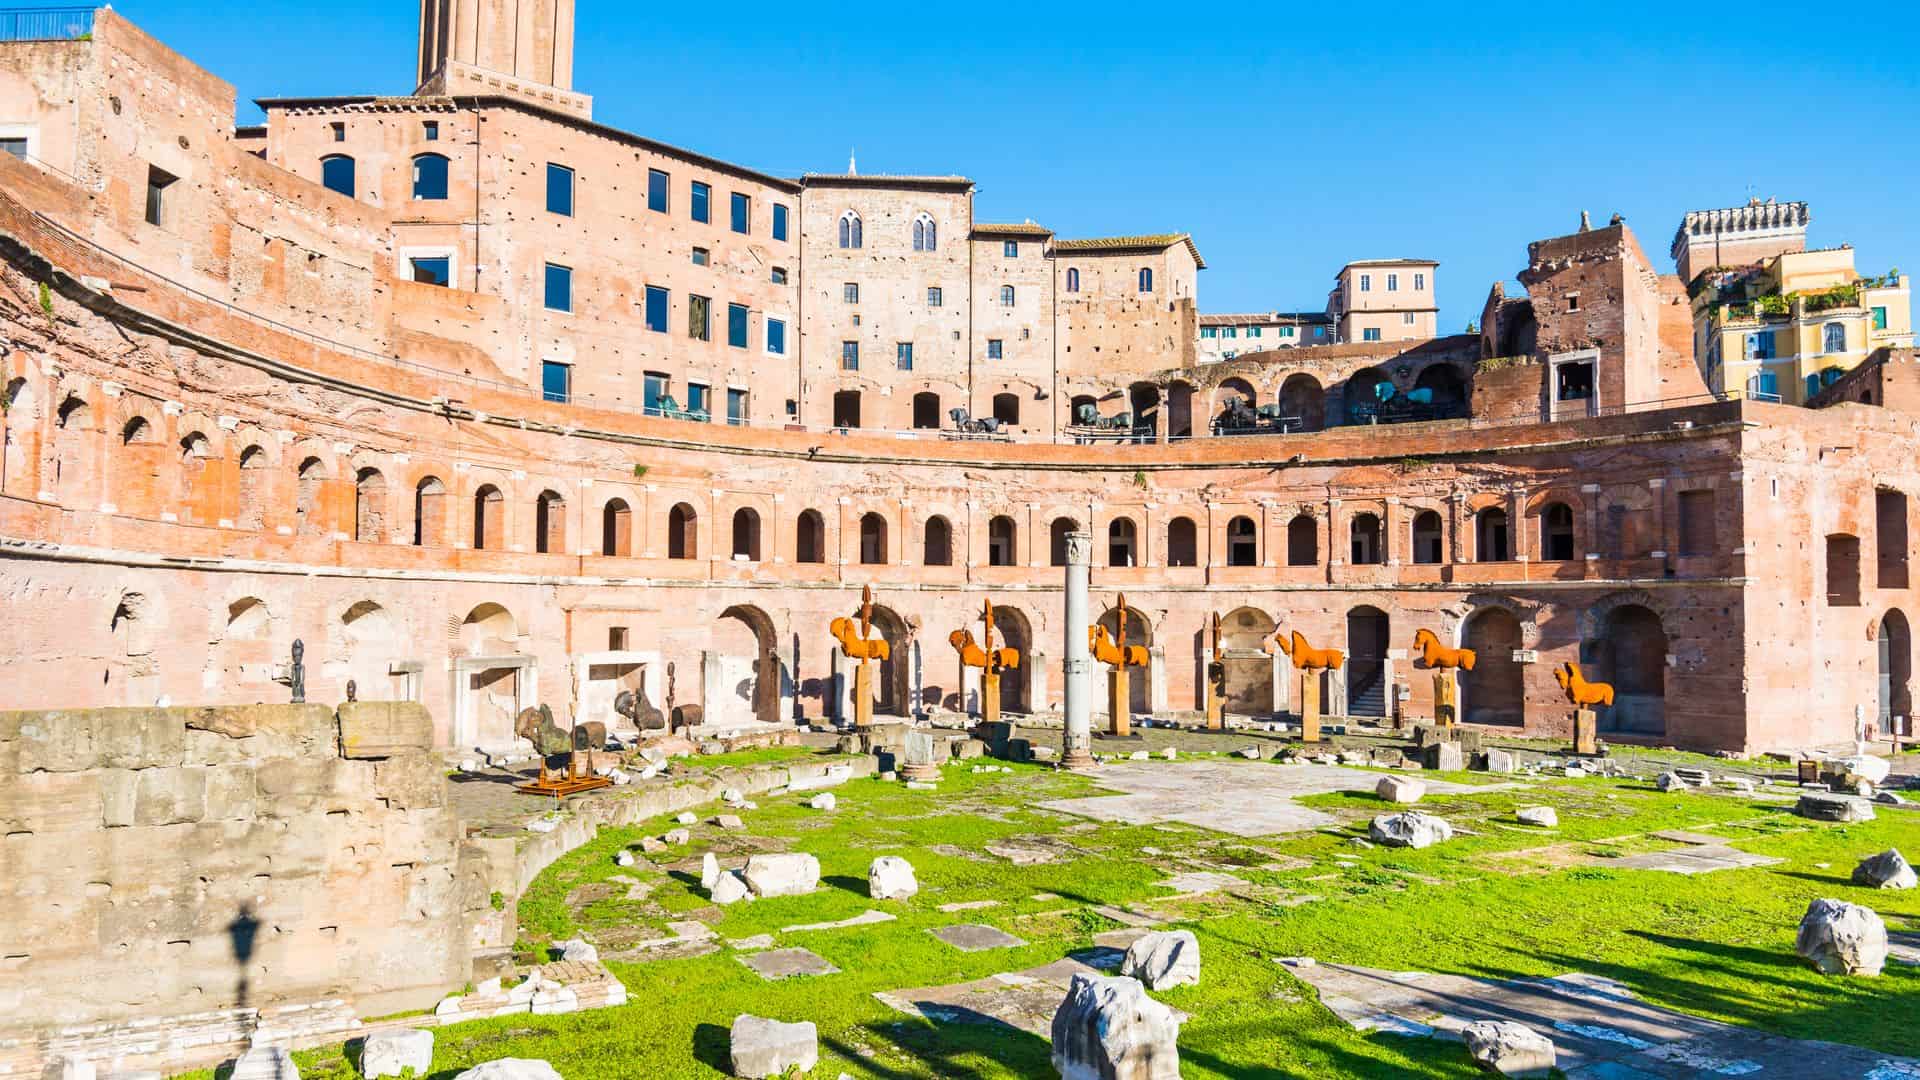 Trajan's Market on Forum of Trajan ruins on a sunny day